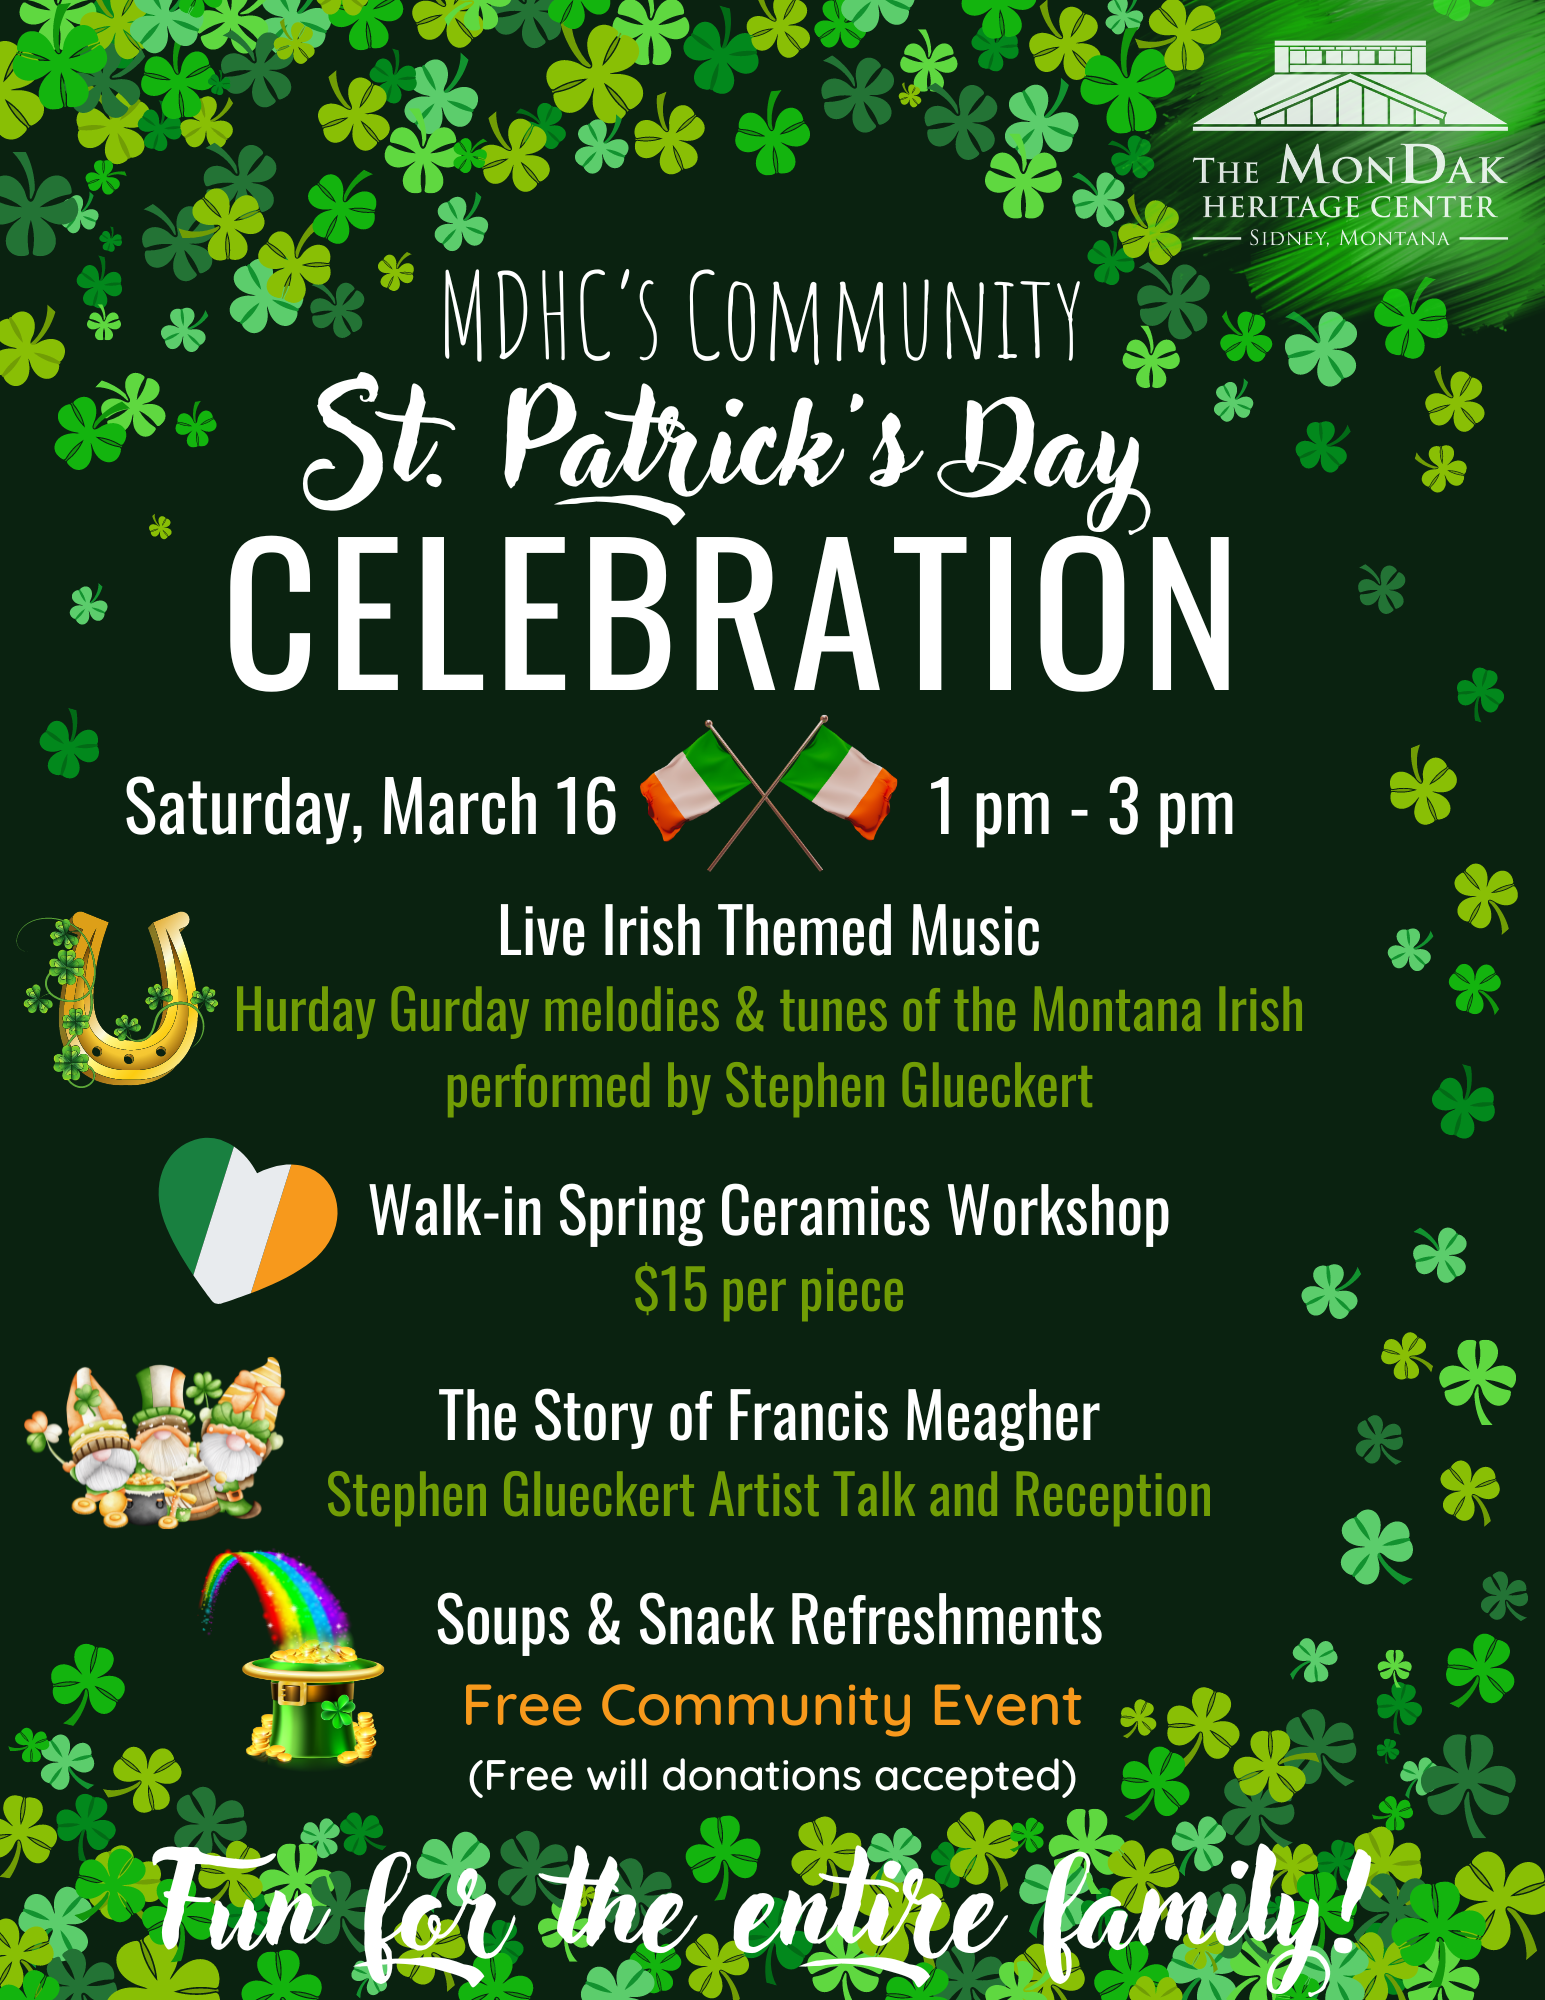 MDHC’s Community St. Patrick’s Day Celebration – Including Walk-In Ceramic’s Class!